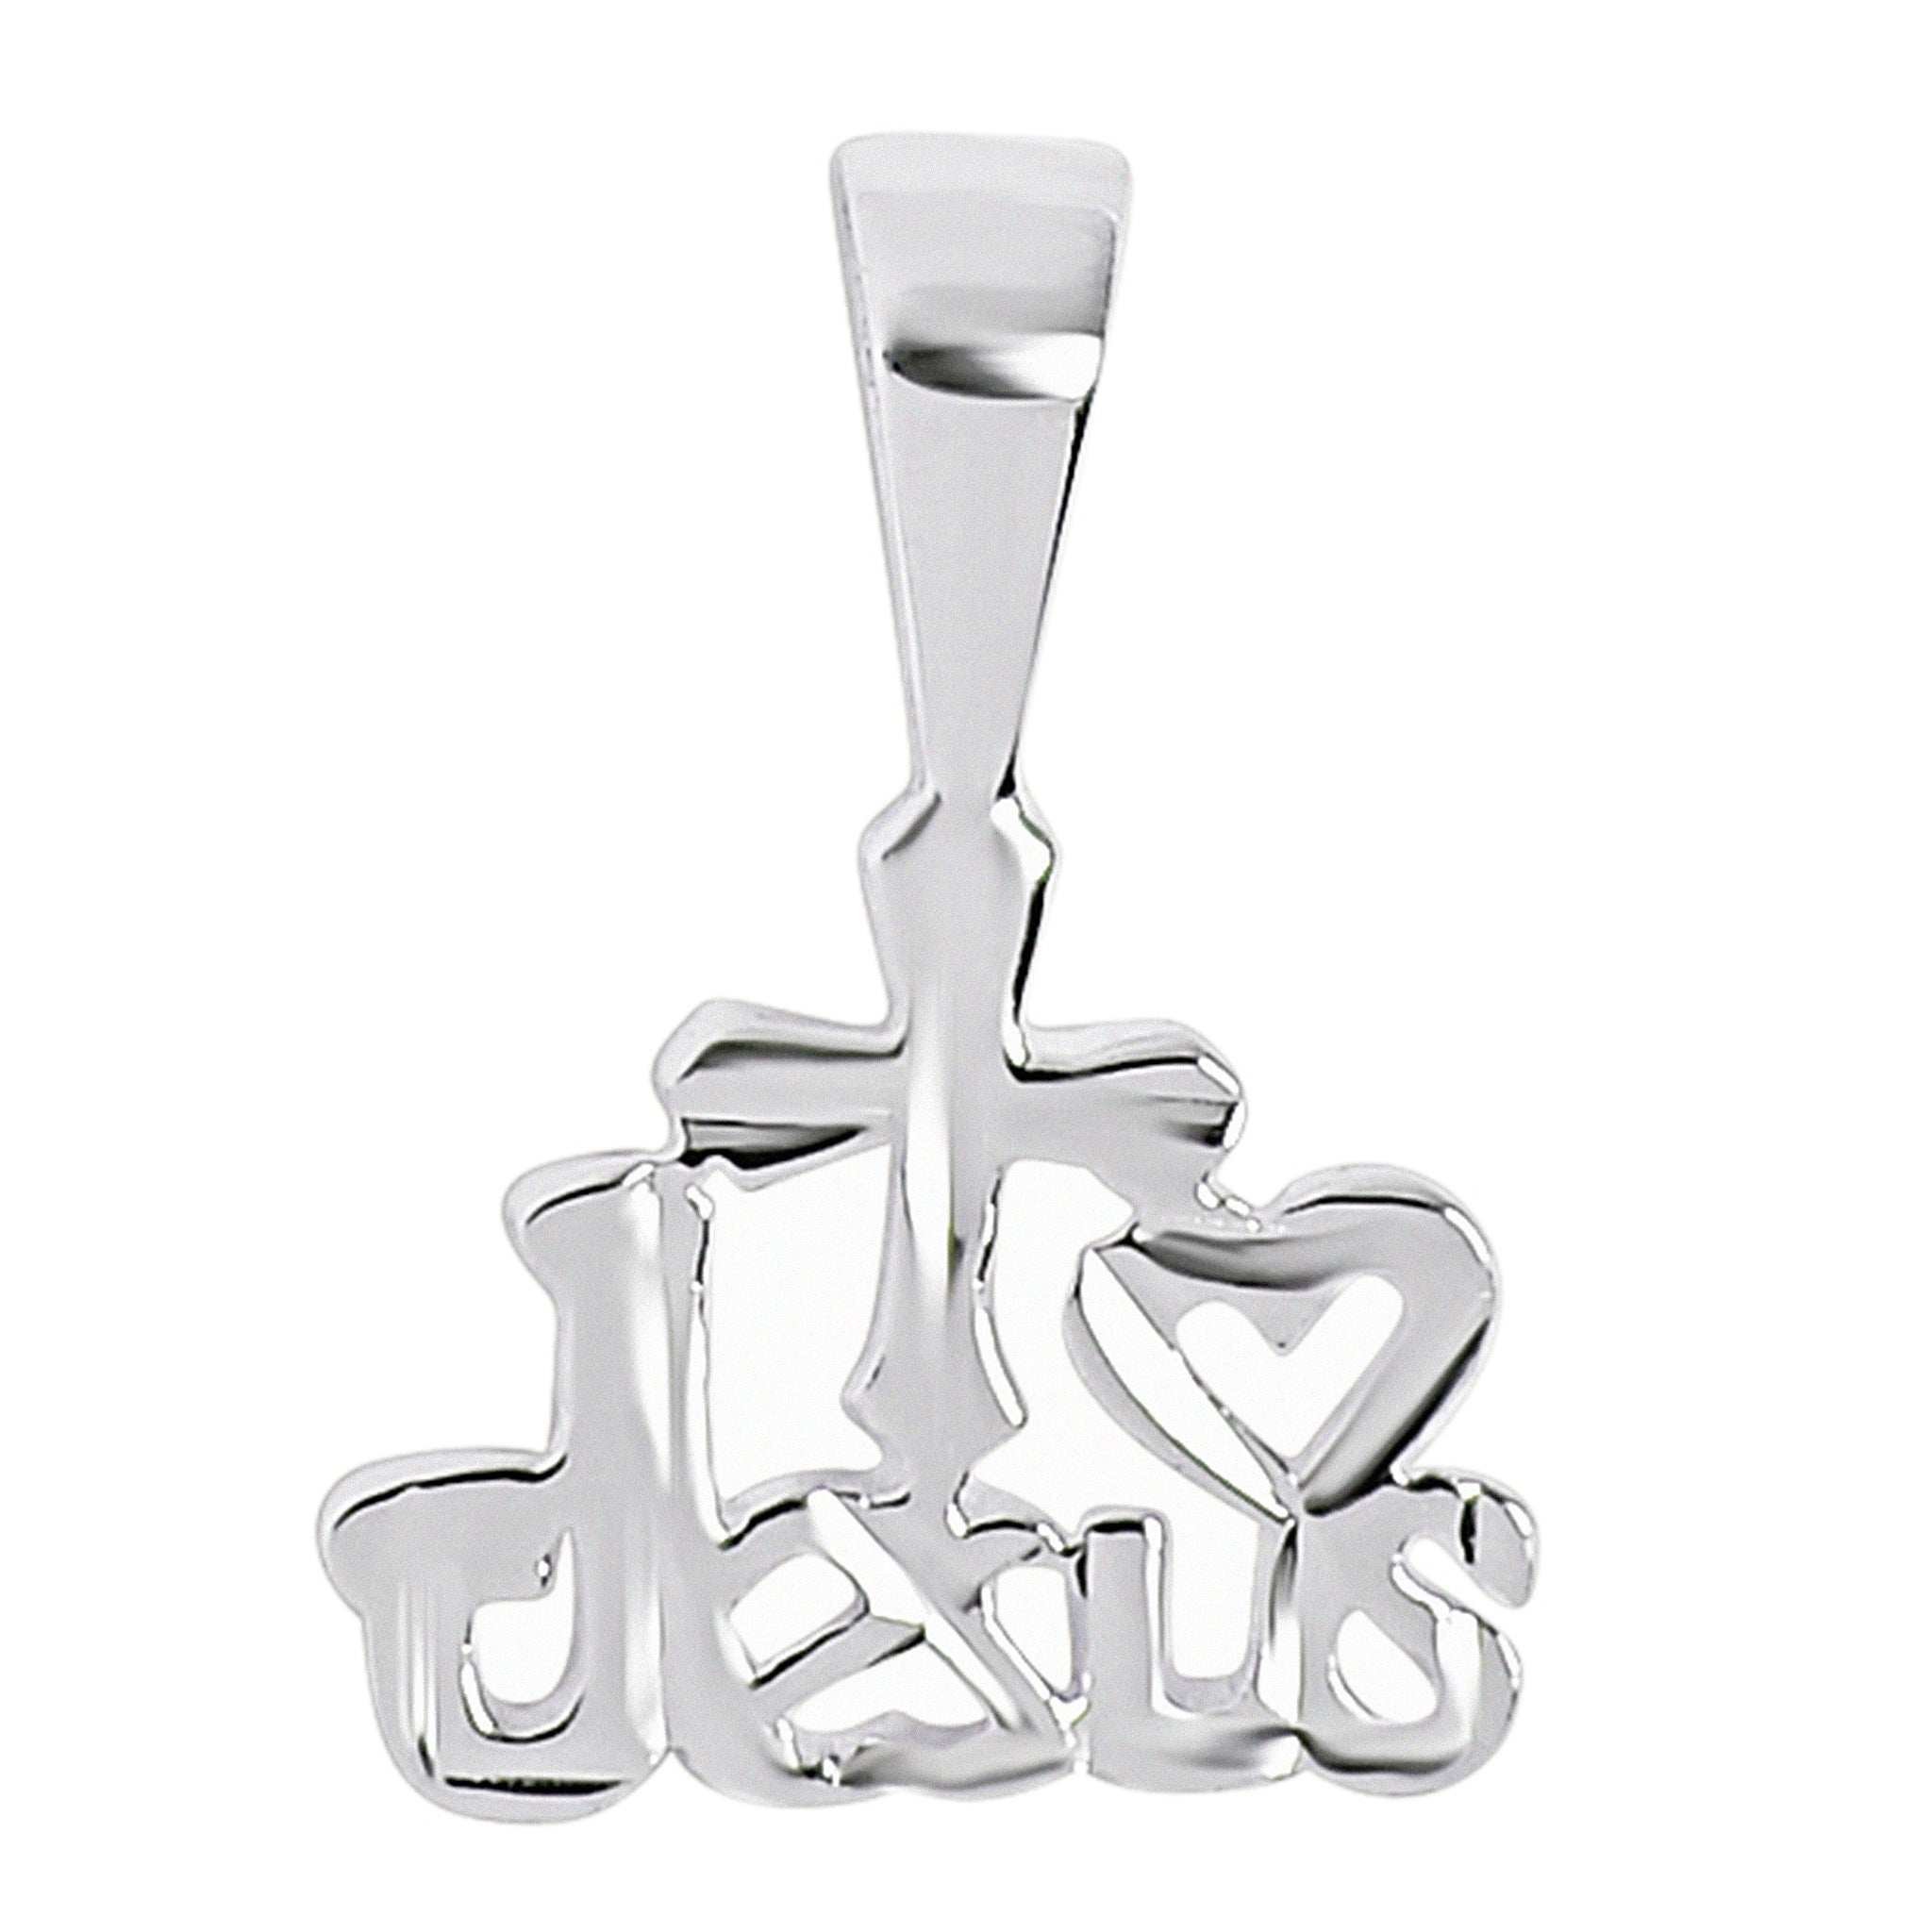 Sterling Silver "I ♥ Jesus" Heart Pendant / SSP0057-sterling silver pendant- .925 sterling silver pendant- Black Friday Gift- silver pendant- necklace pendant